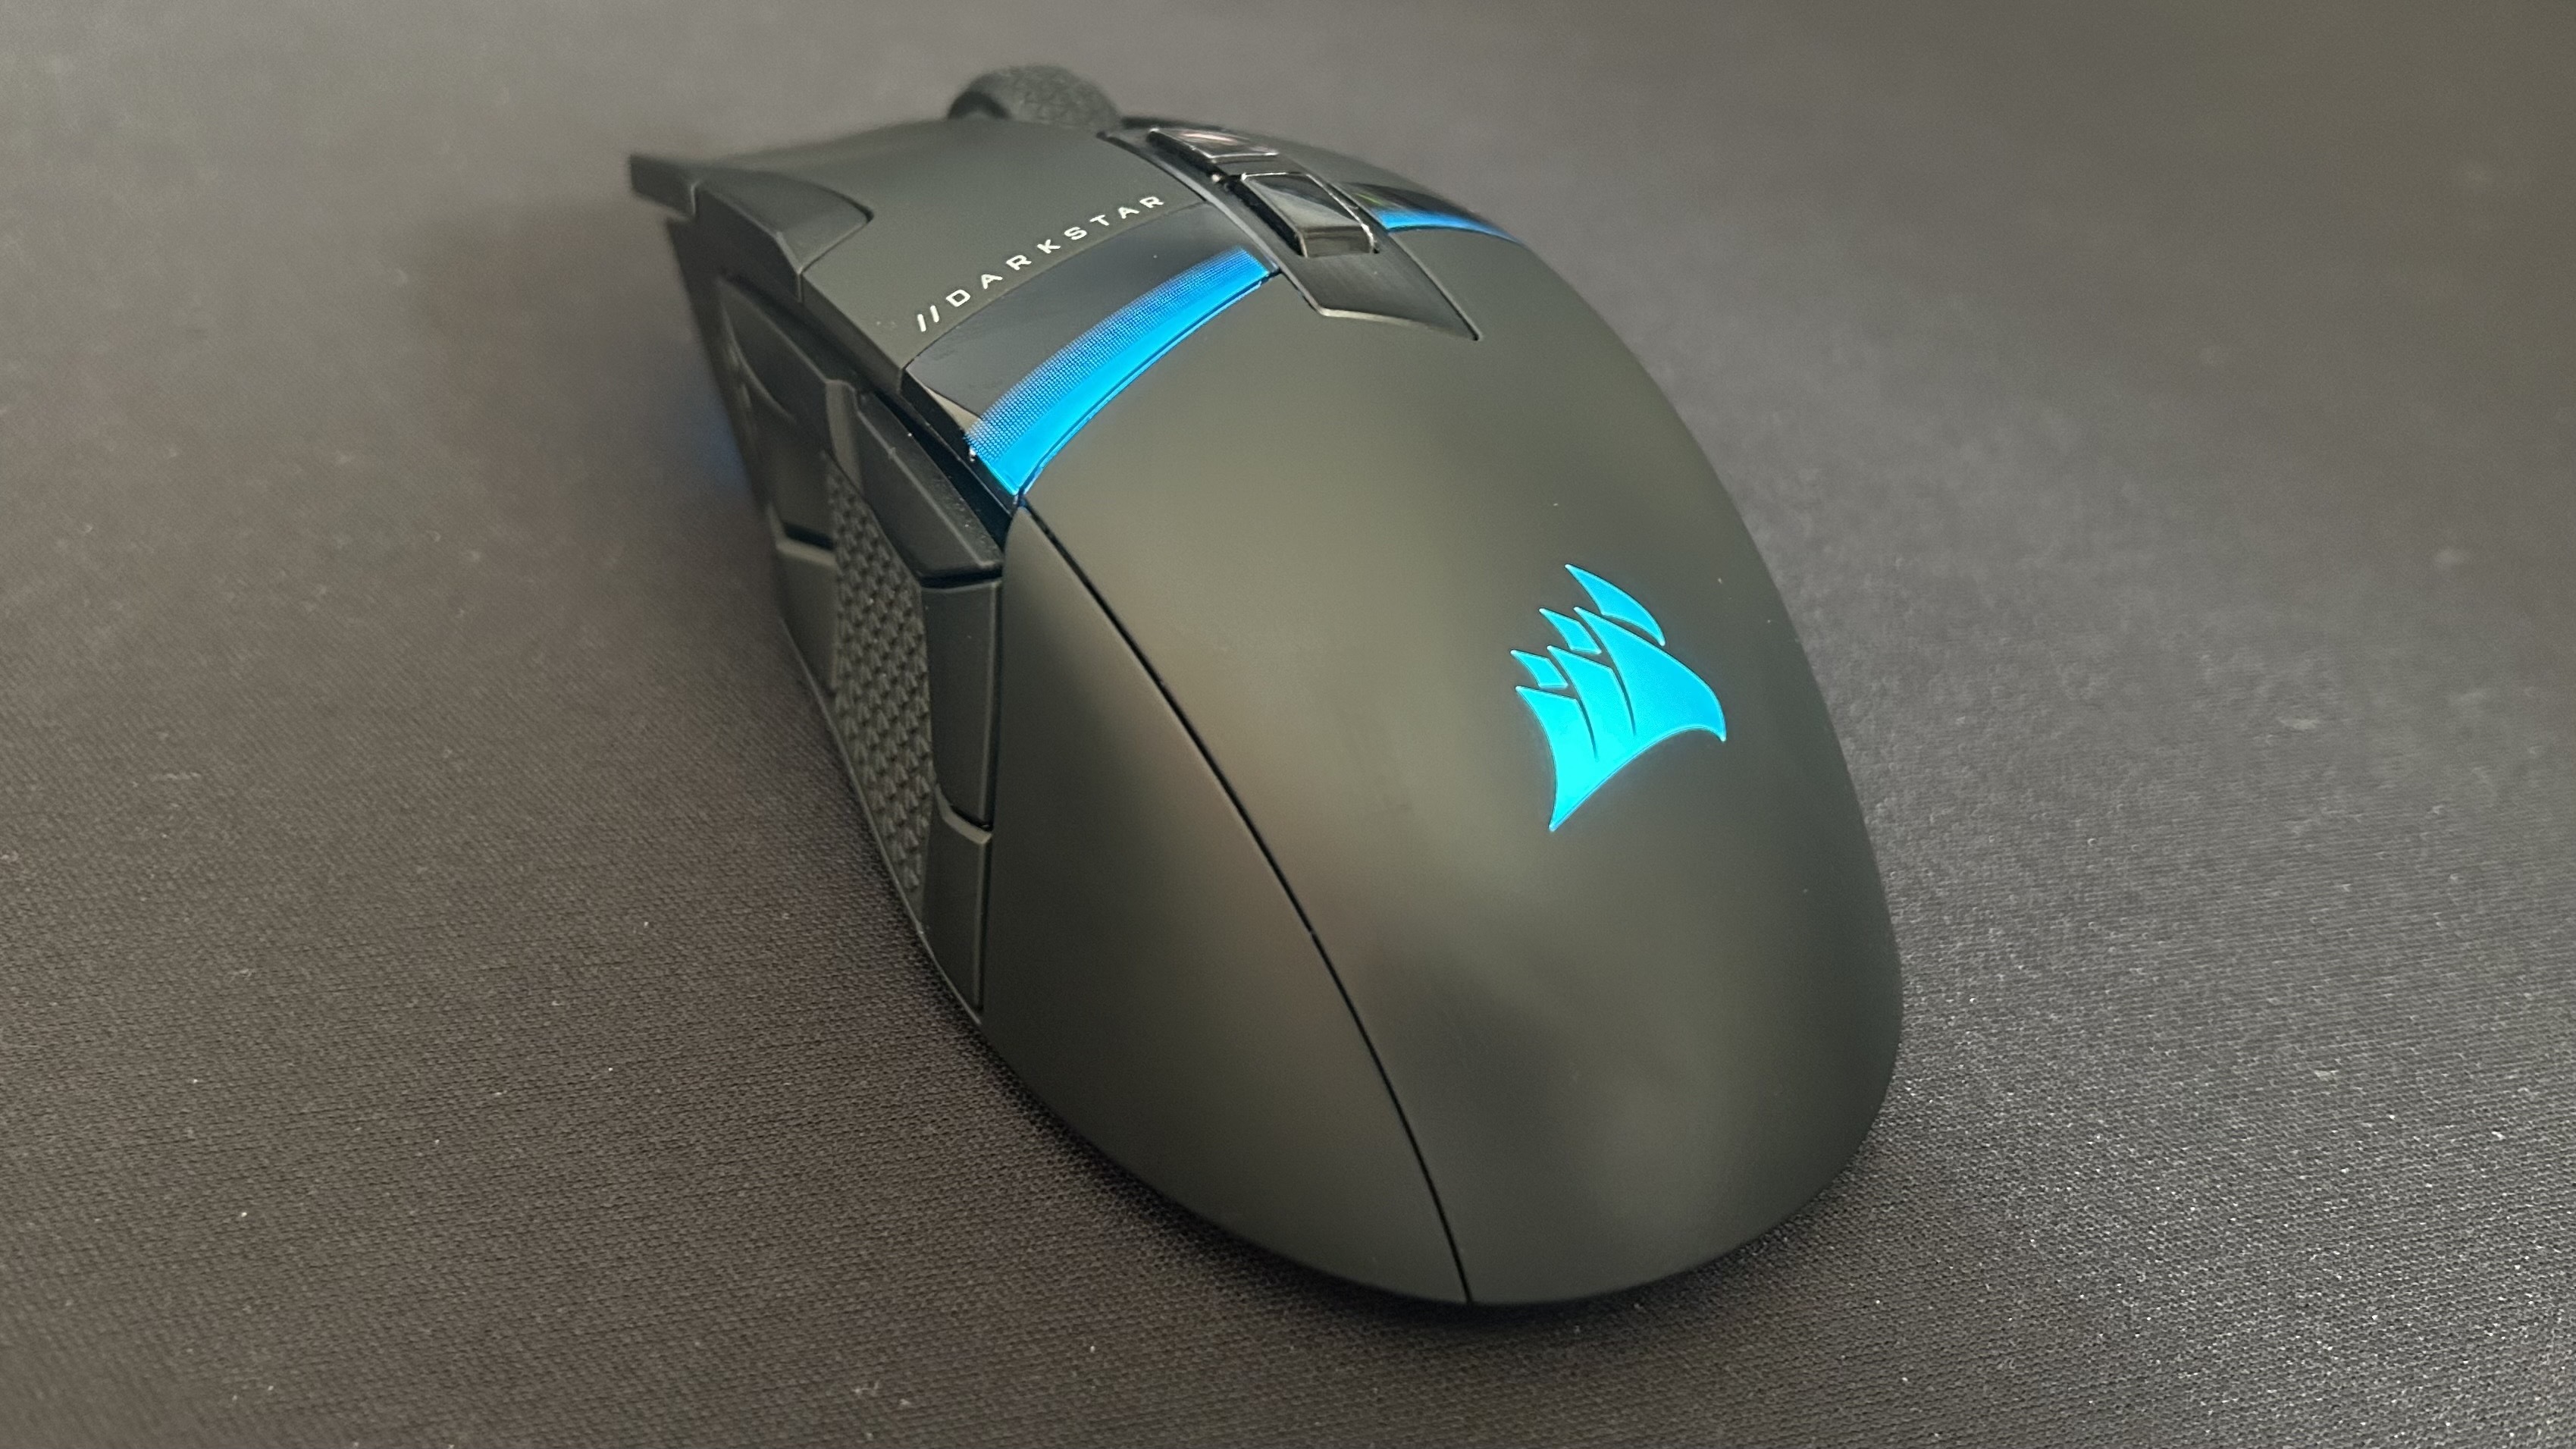 Corsair Darkstar Wireless gaming mouse on a matte black background